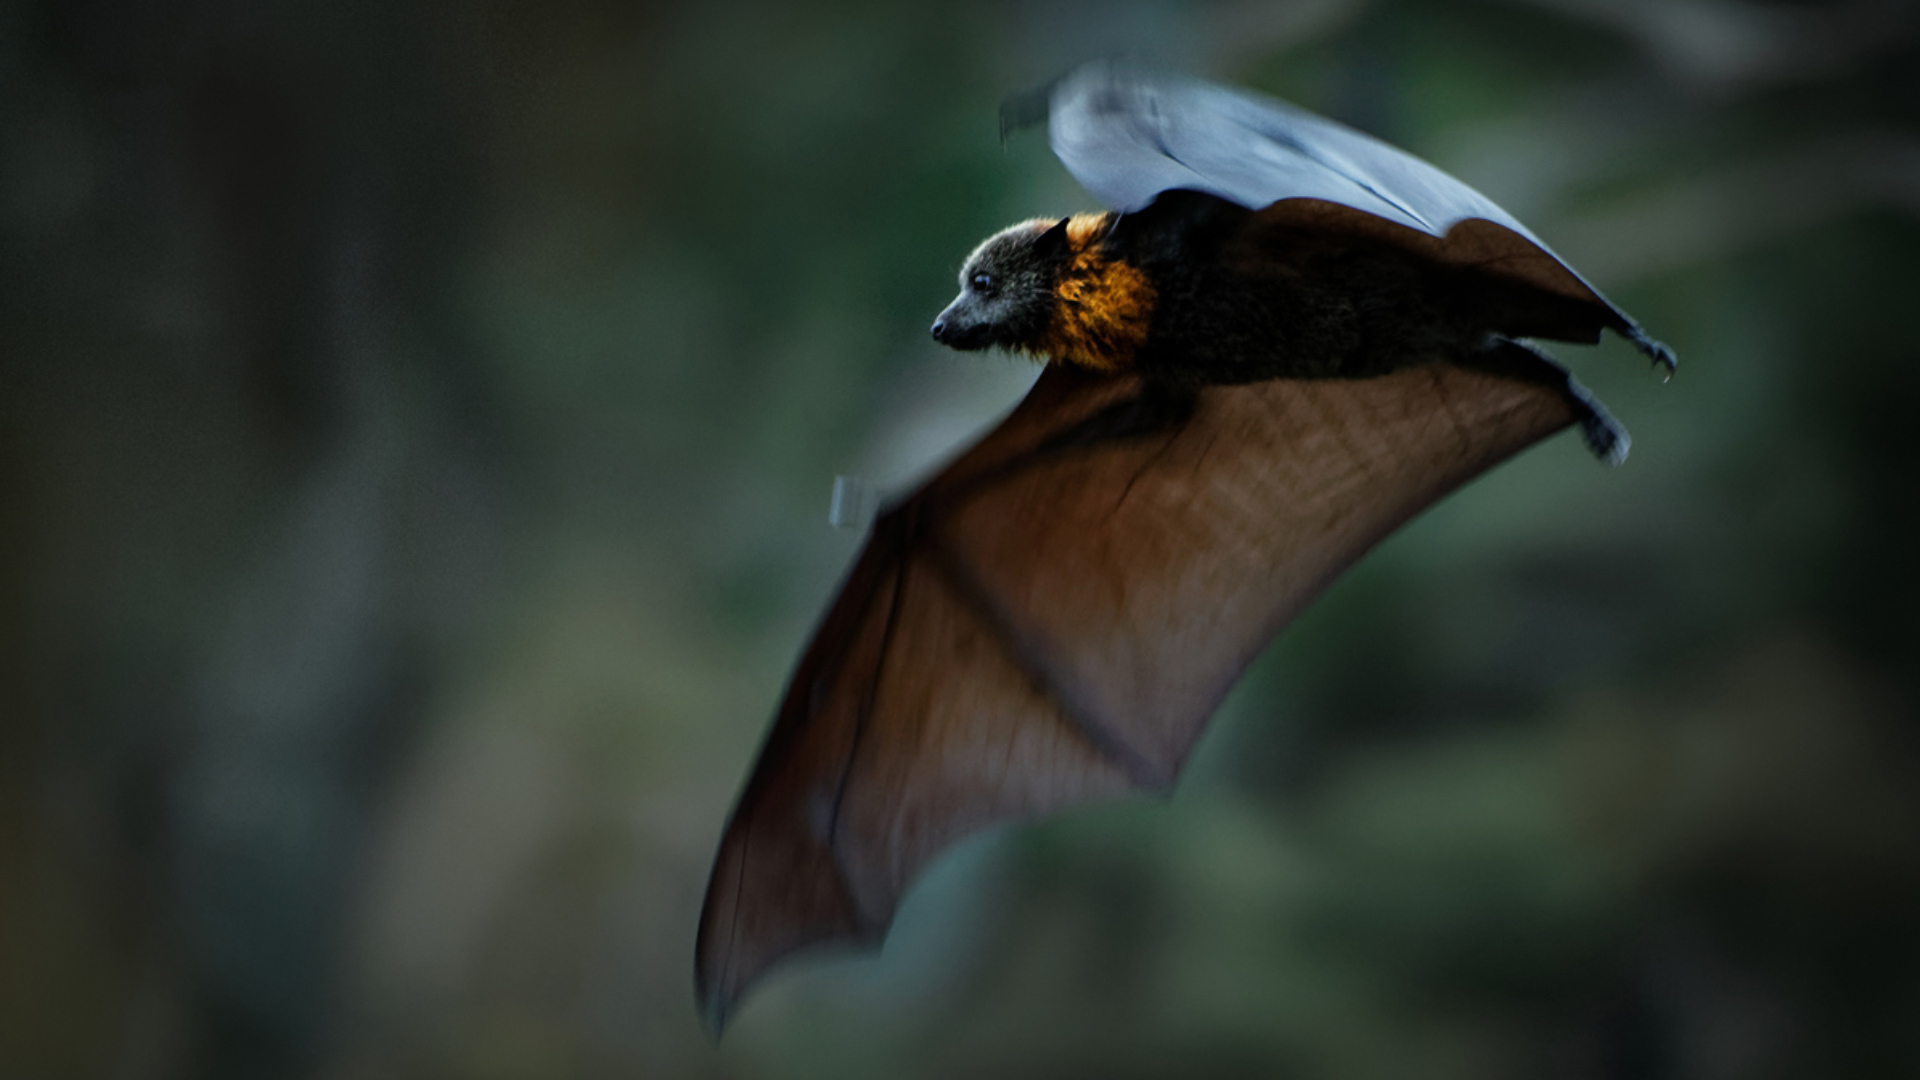 Australasian Bat Society Grants